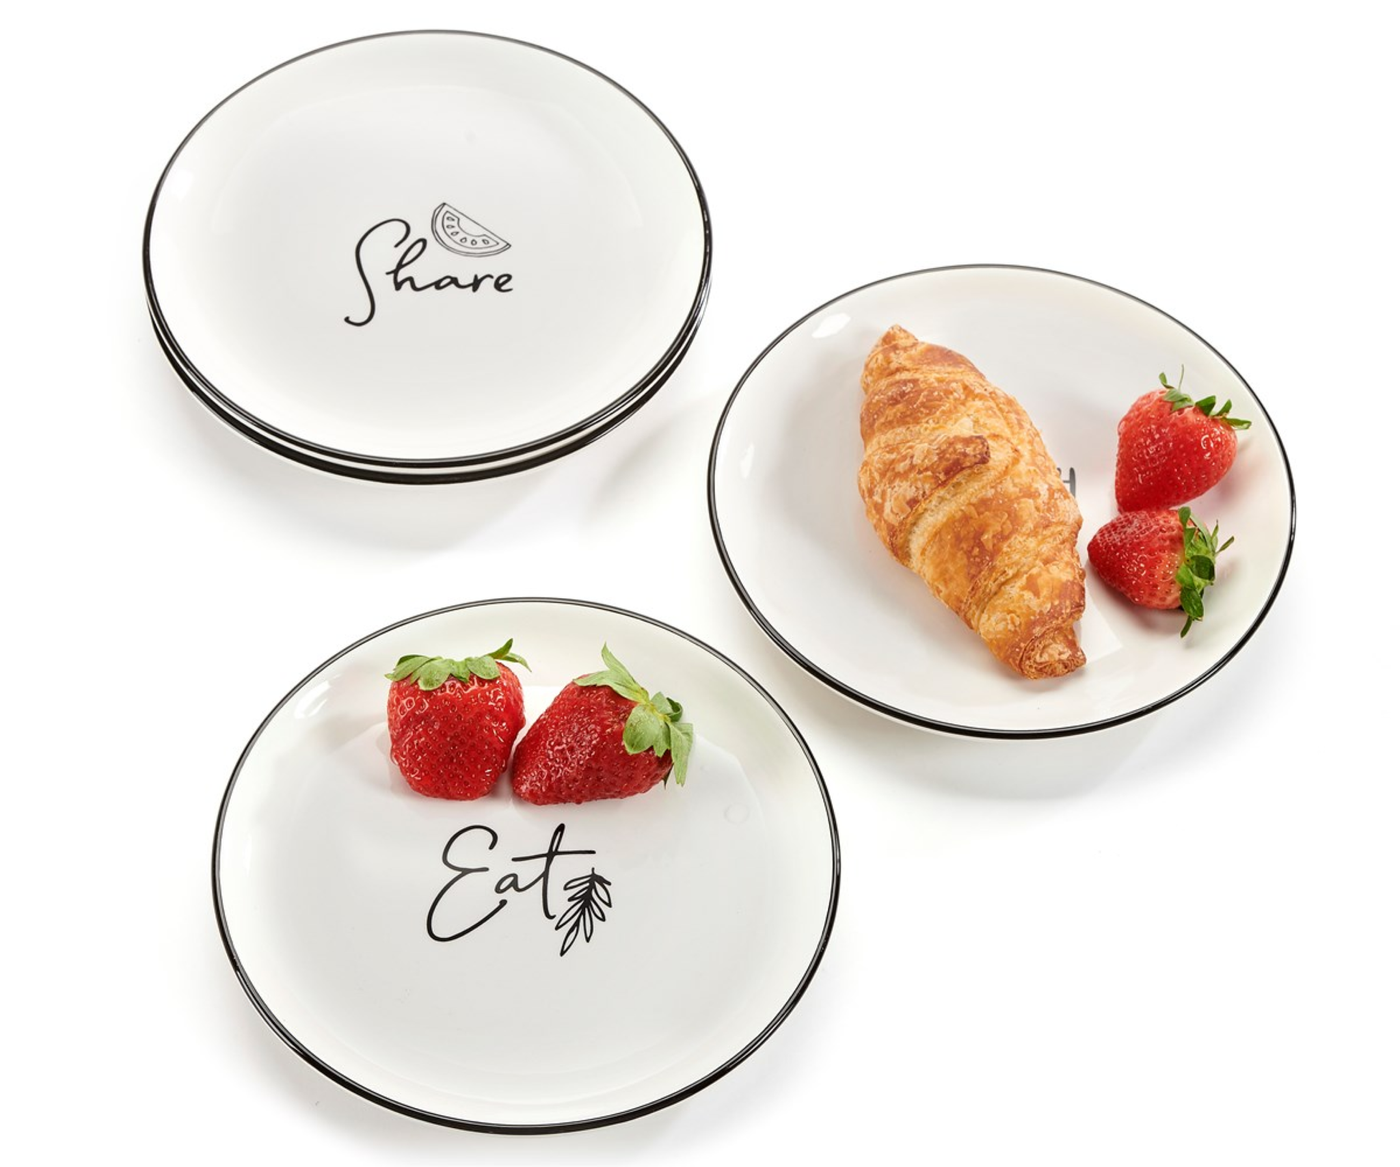 8" Ceramic Plates -- Share, Crunch, Munch, Eat